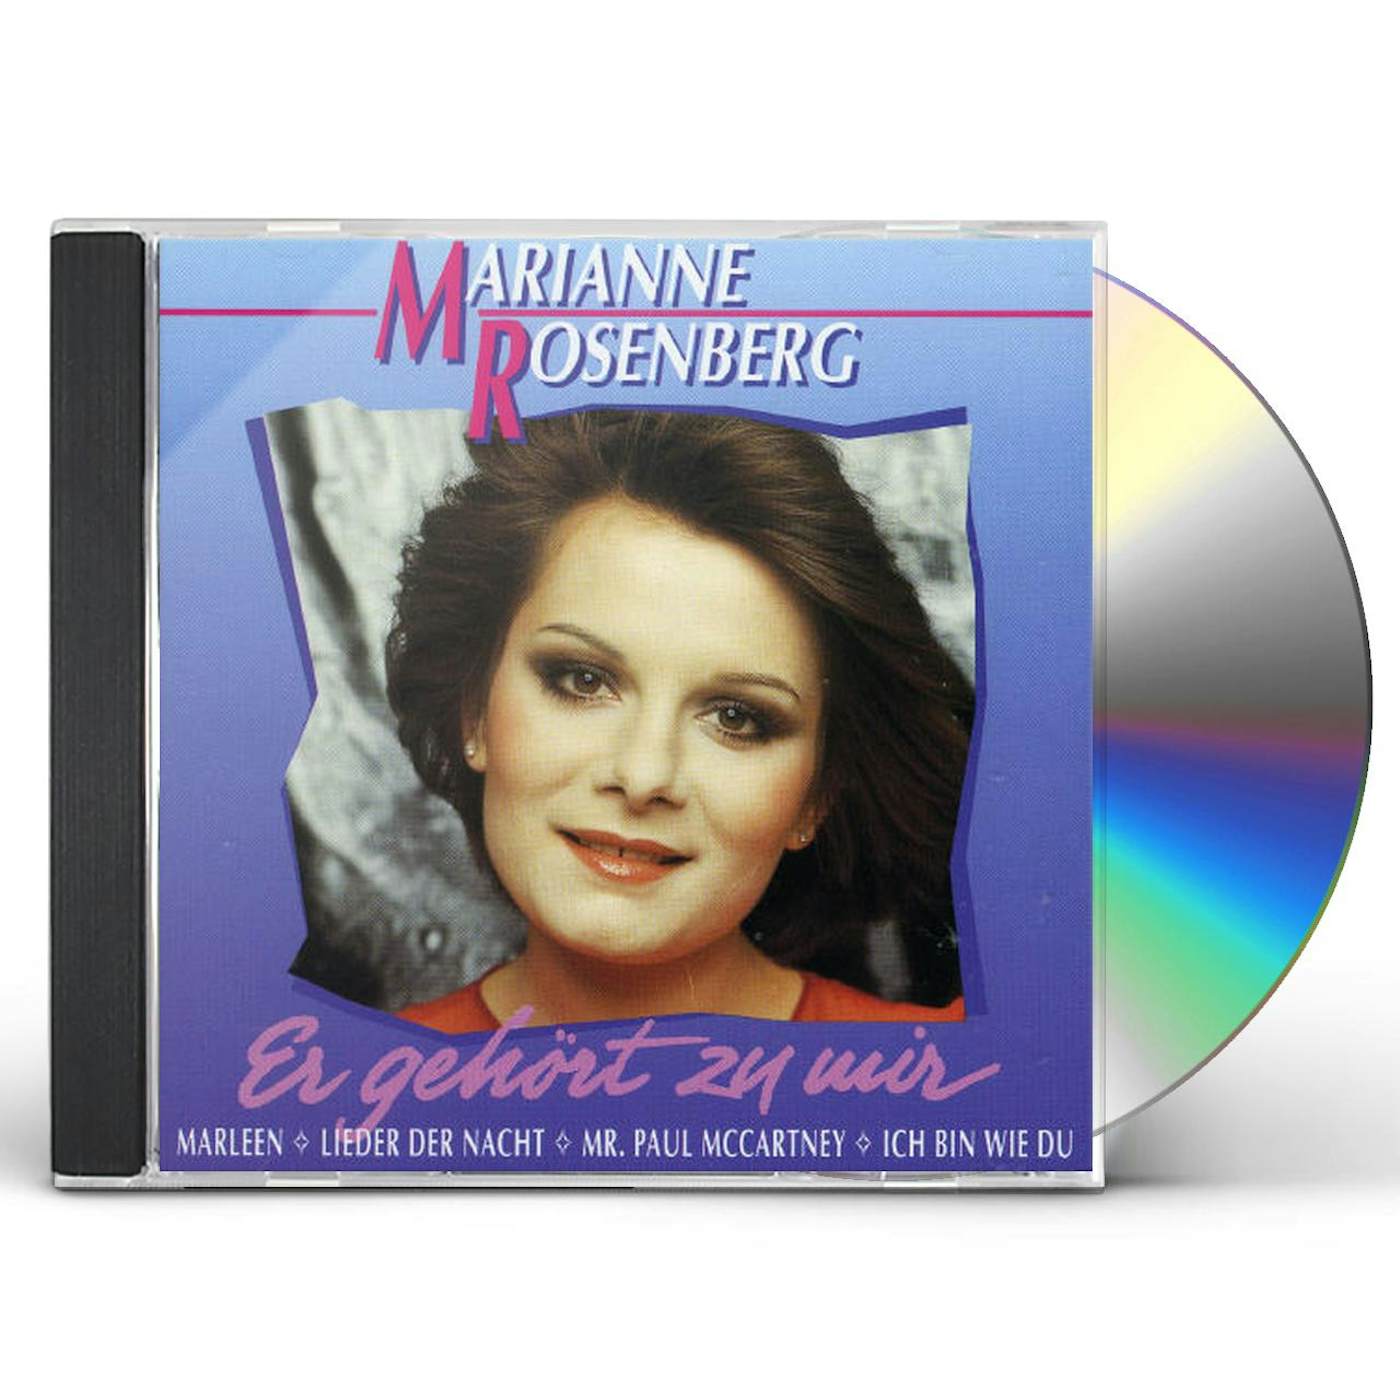 Marianne Rosenberg ER GEHORT ZU MIR CD